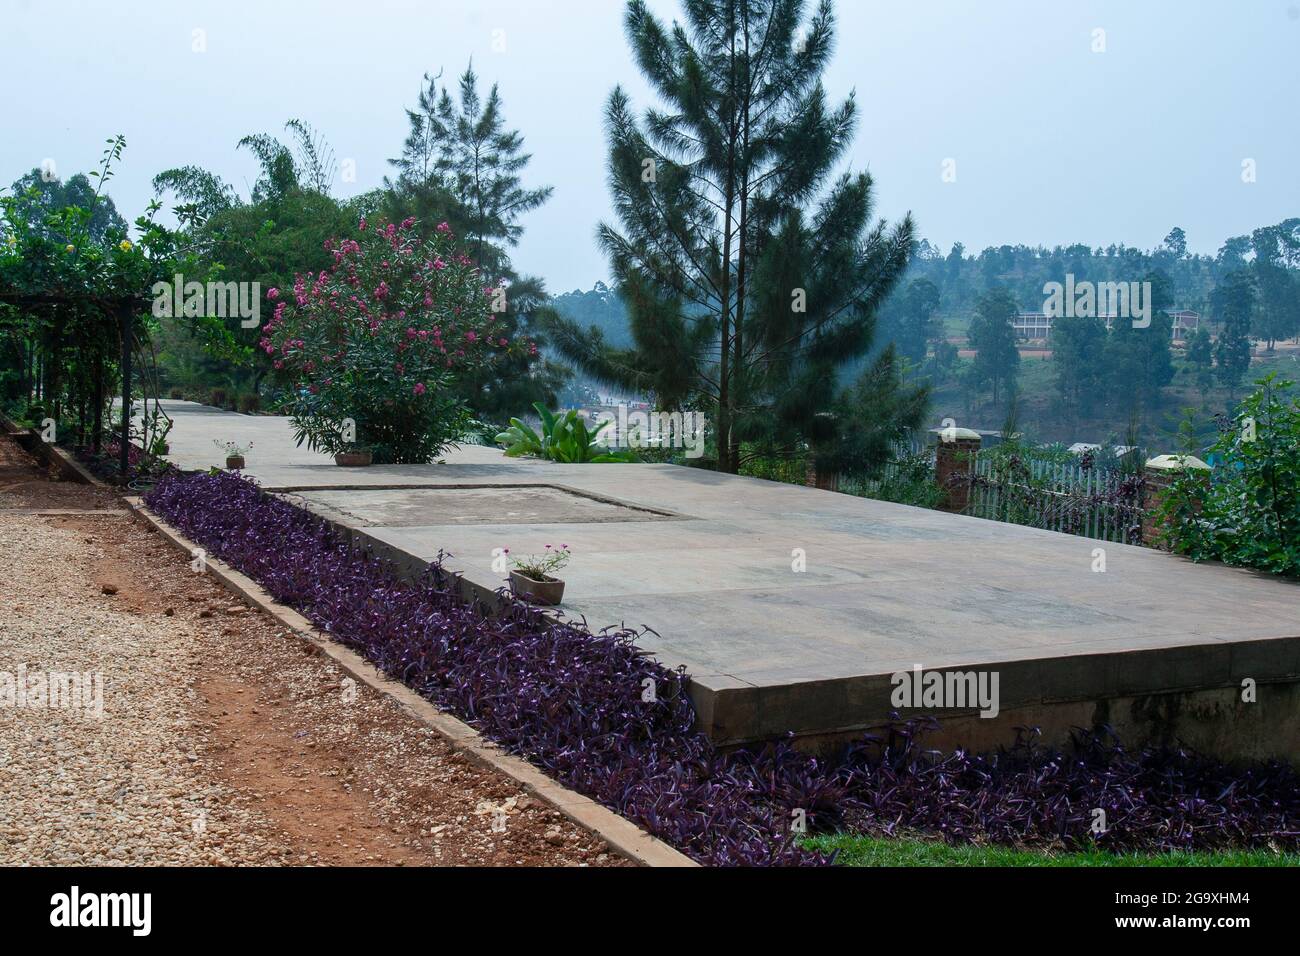 Kigali Genocide Memorial Center Rwanda. High quality photo Stock Photo